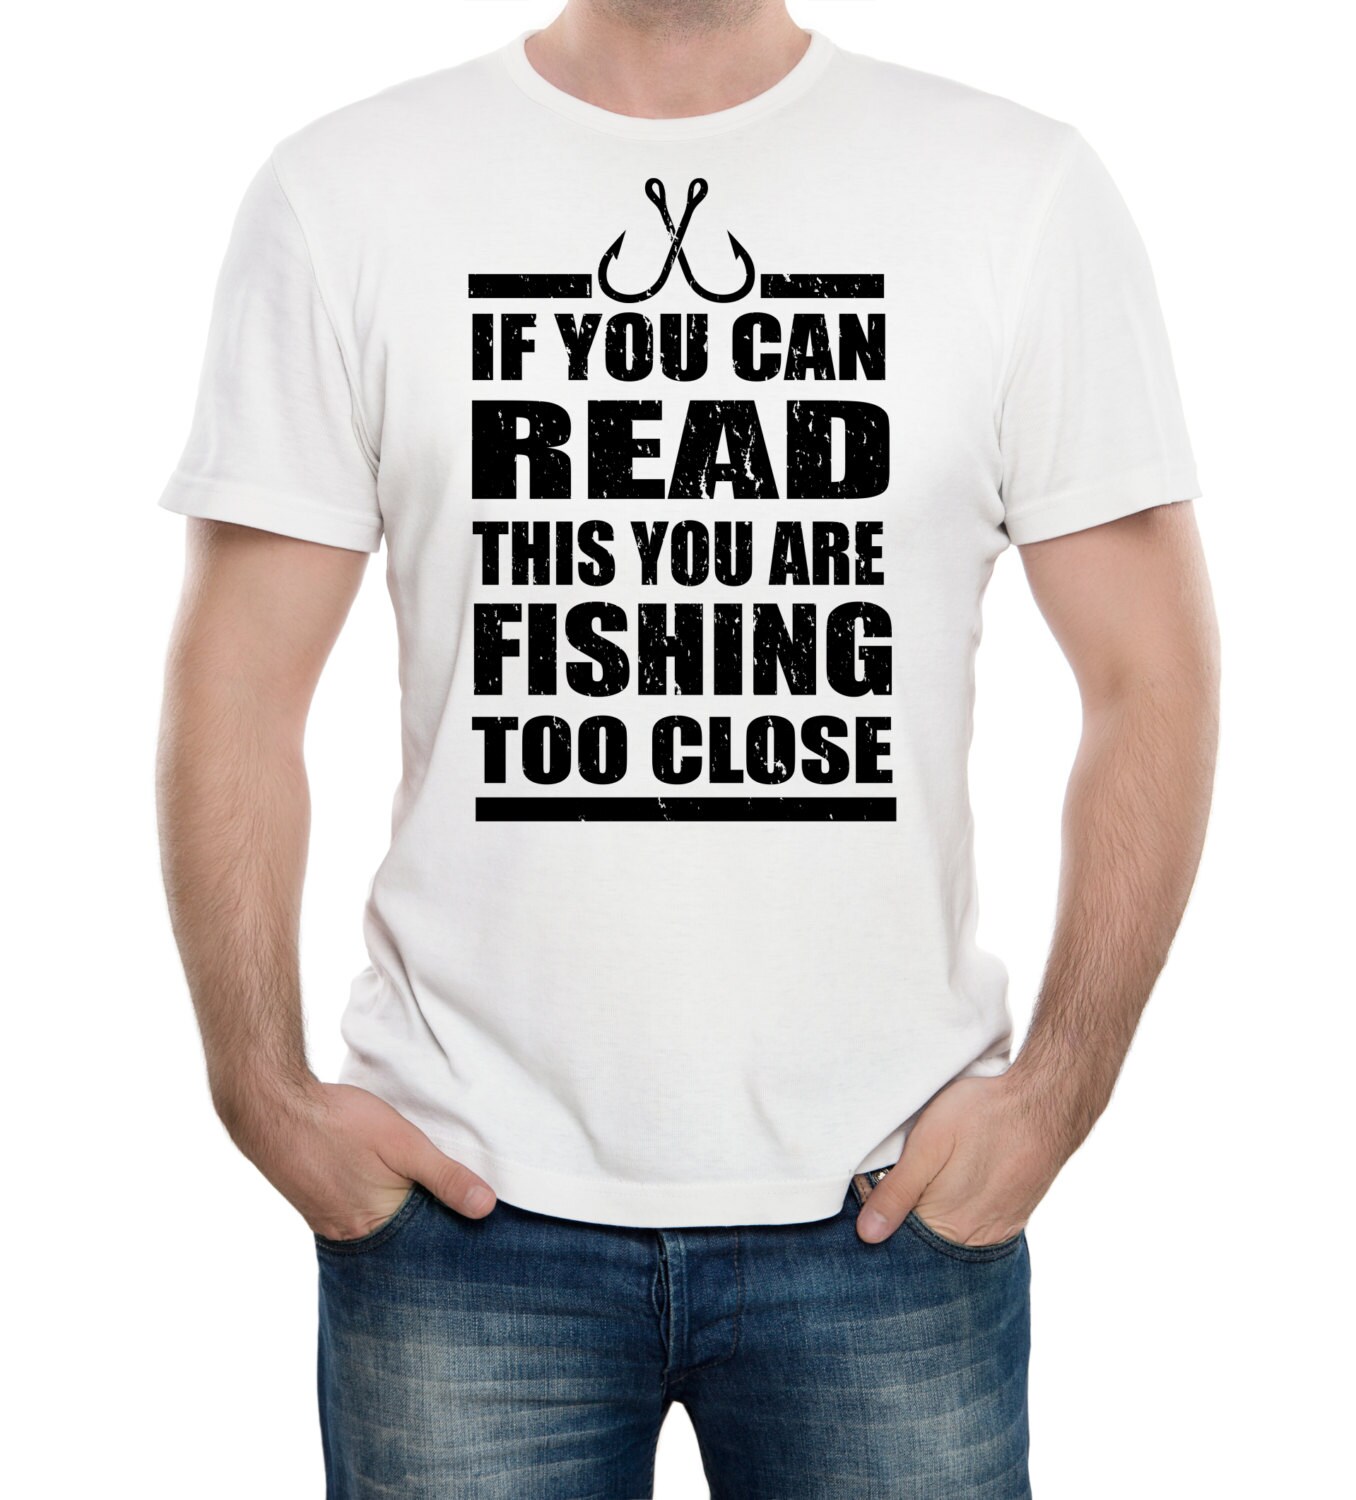 Fishing Shirts For Men, You Are Fishing Too Close Funny Tee T-Shirt